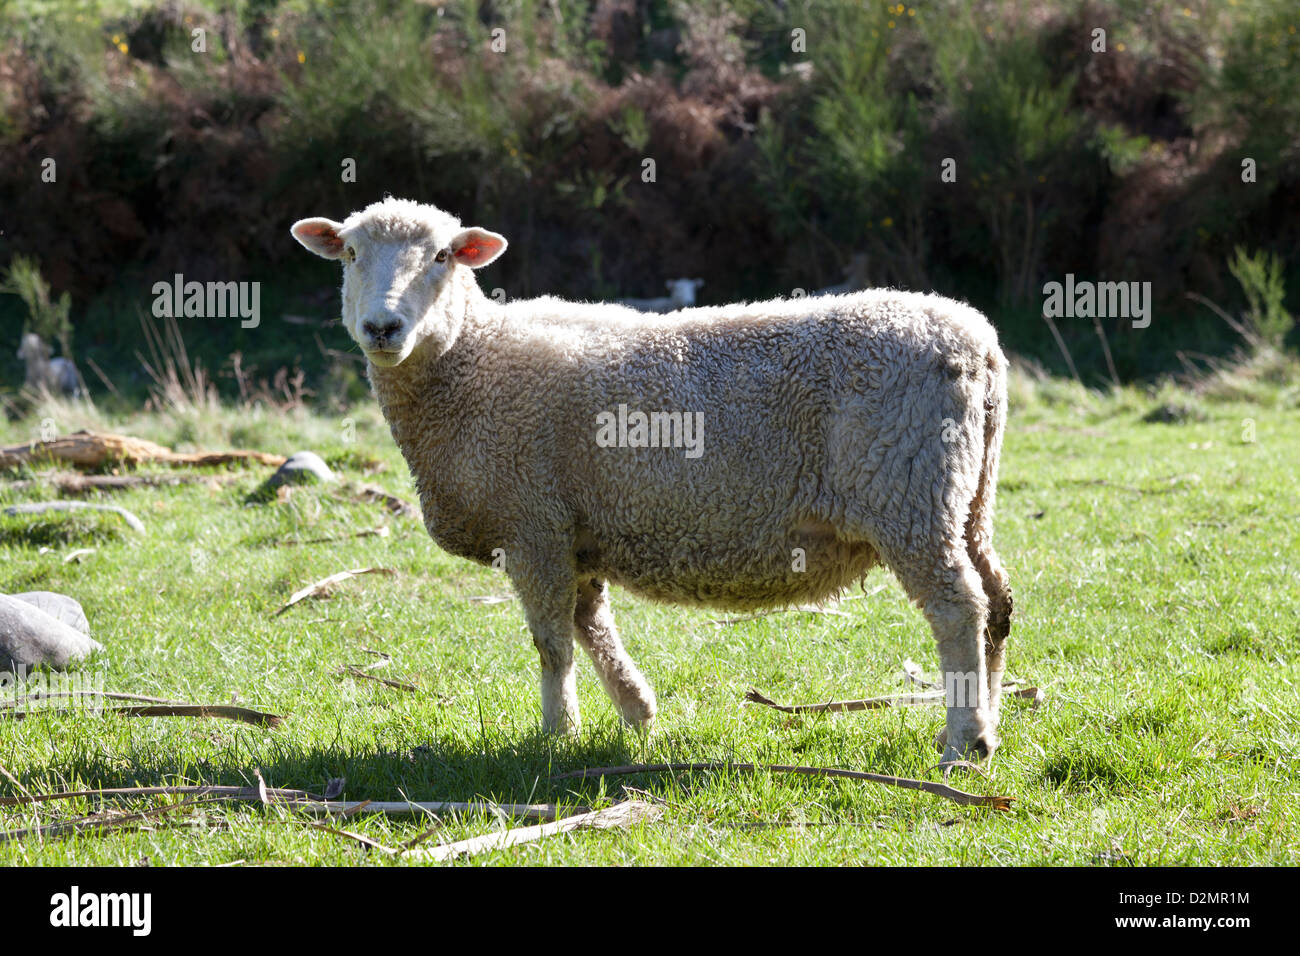 One single sheep in New Zealand Stock Photo